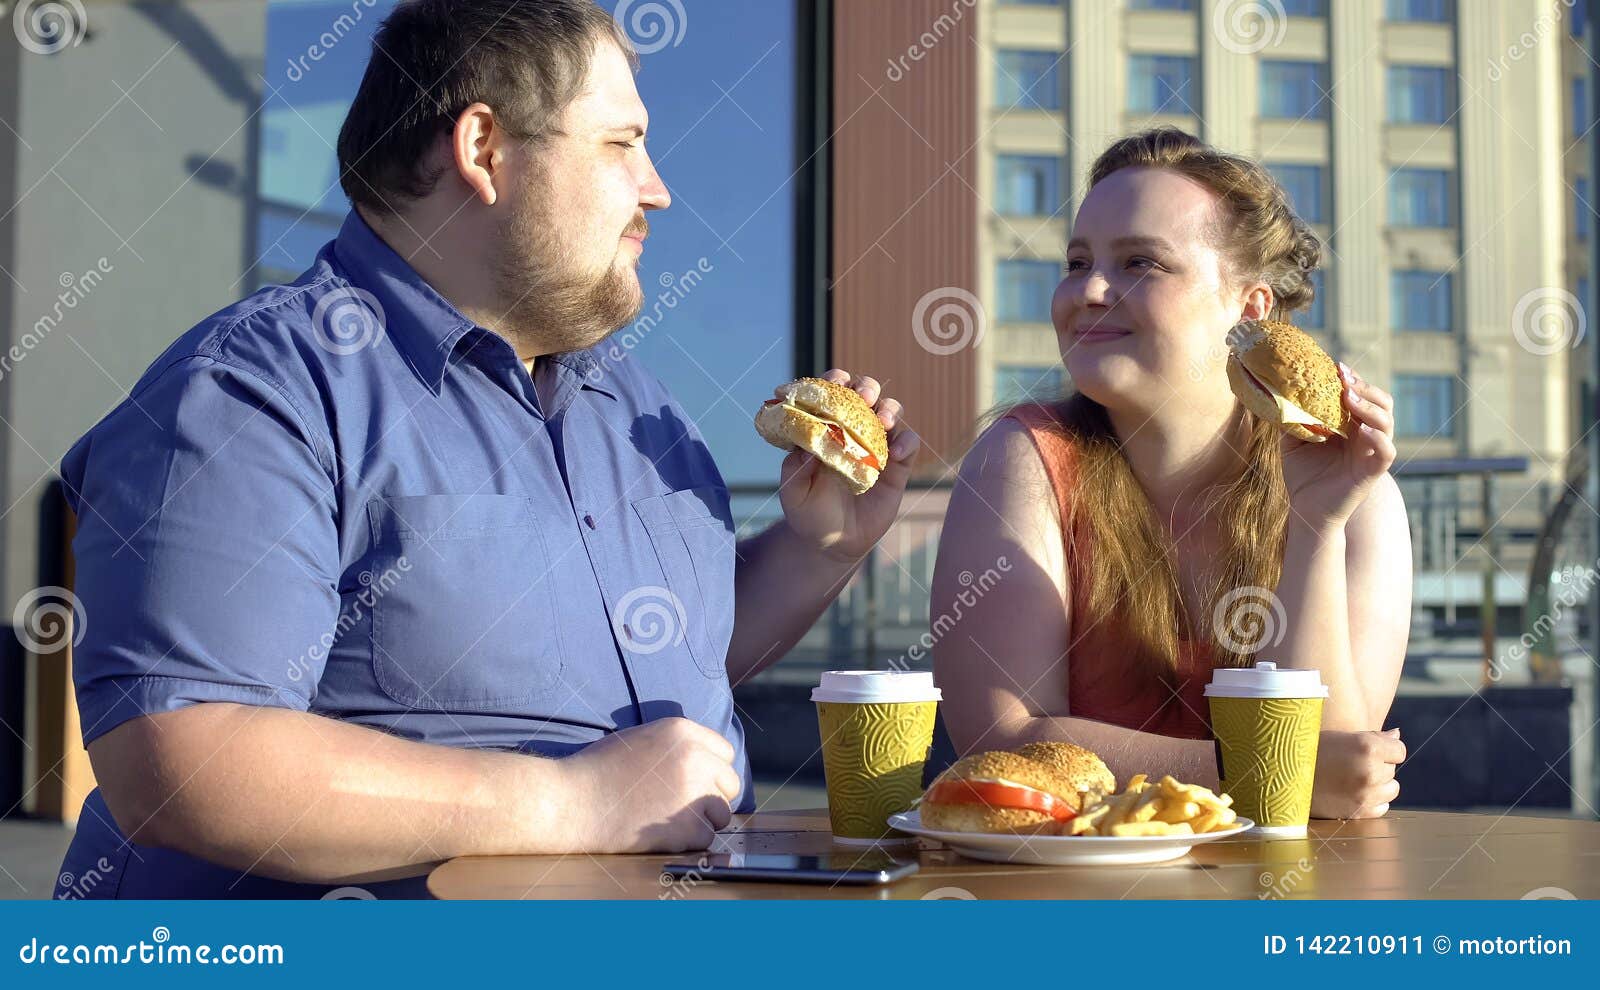 Chicks date do guys fat Why Women